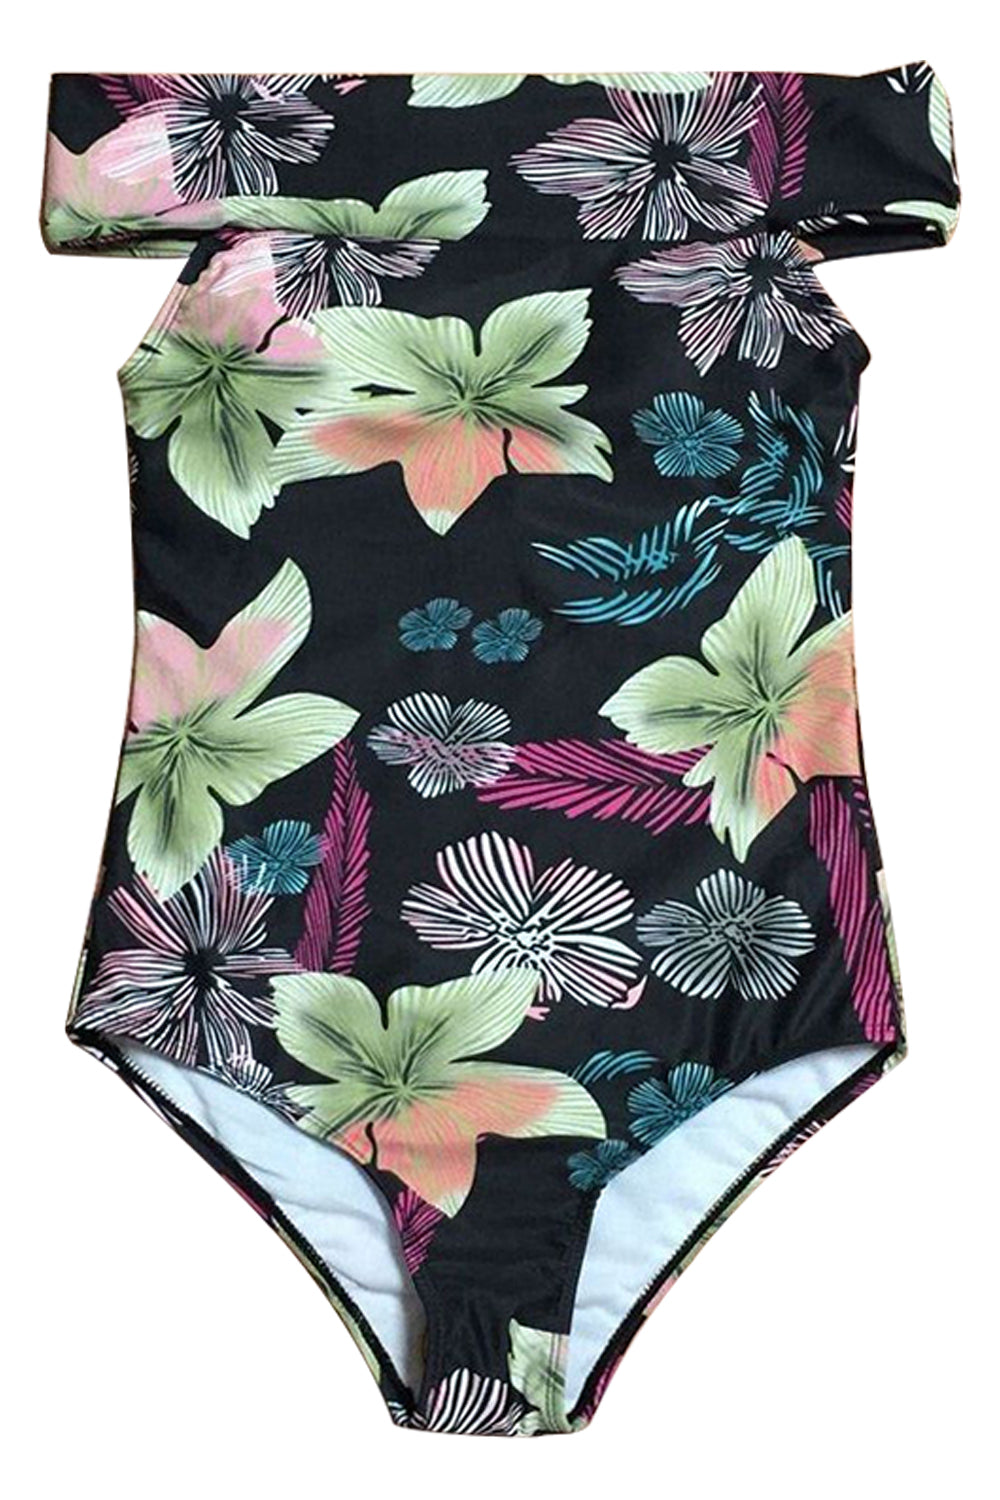 Iyasson Black Floral Printing Off-shoulder Design One-piece Swimsuit